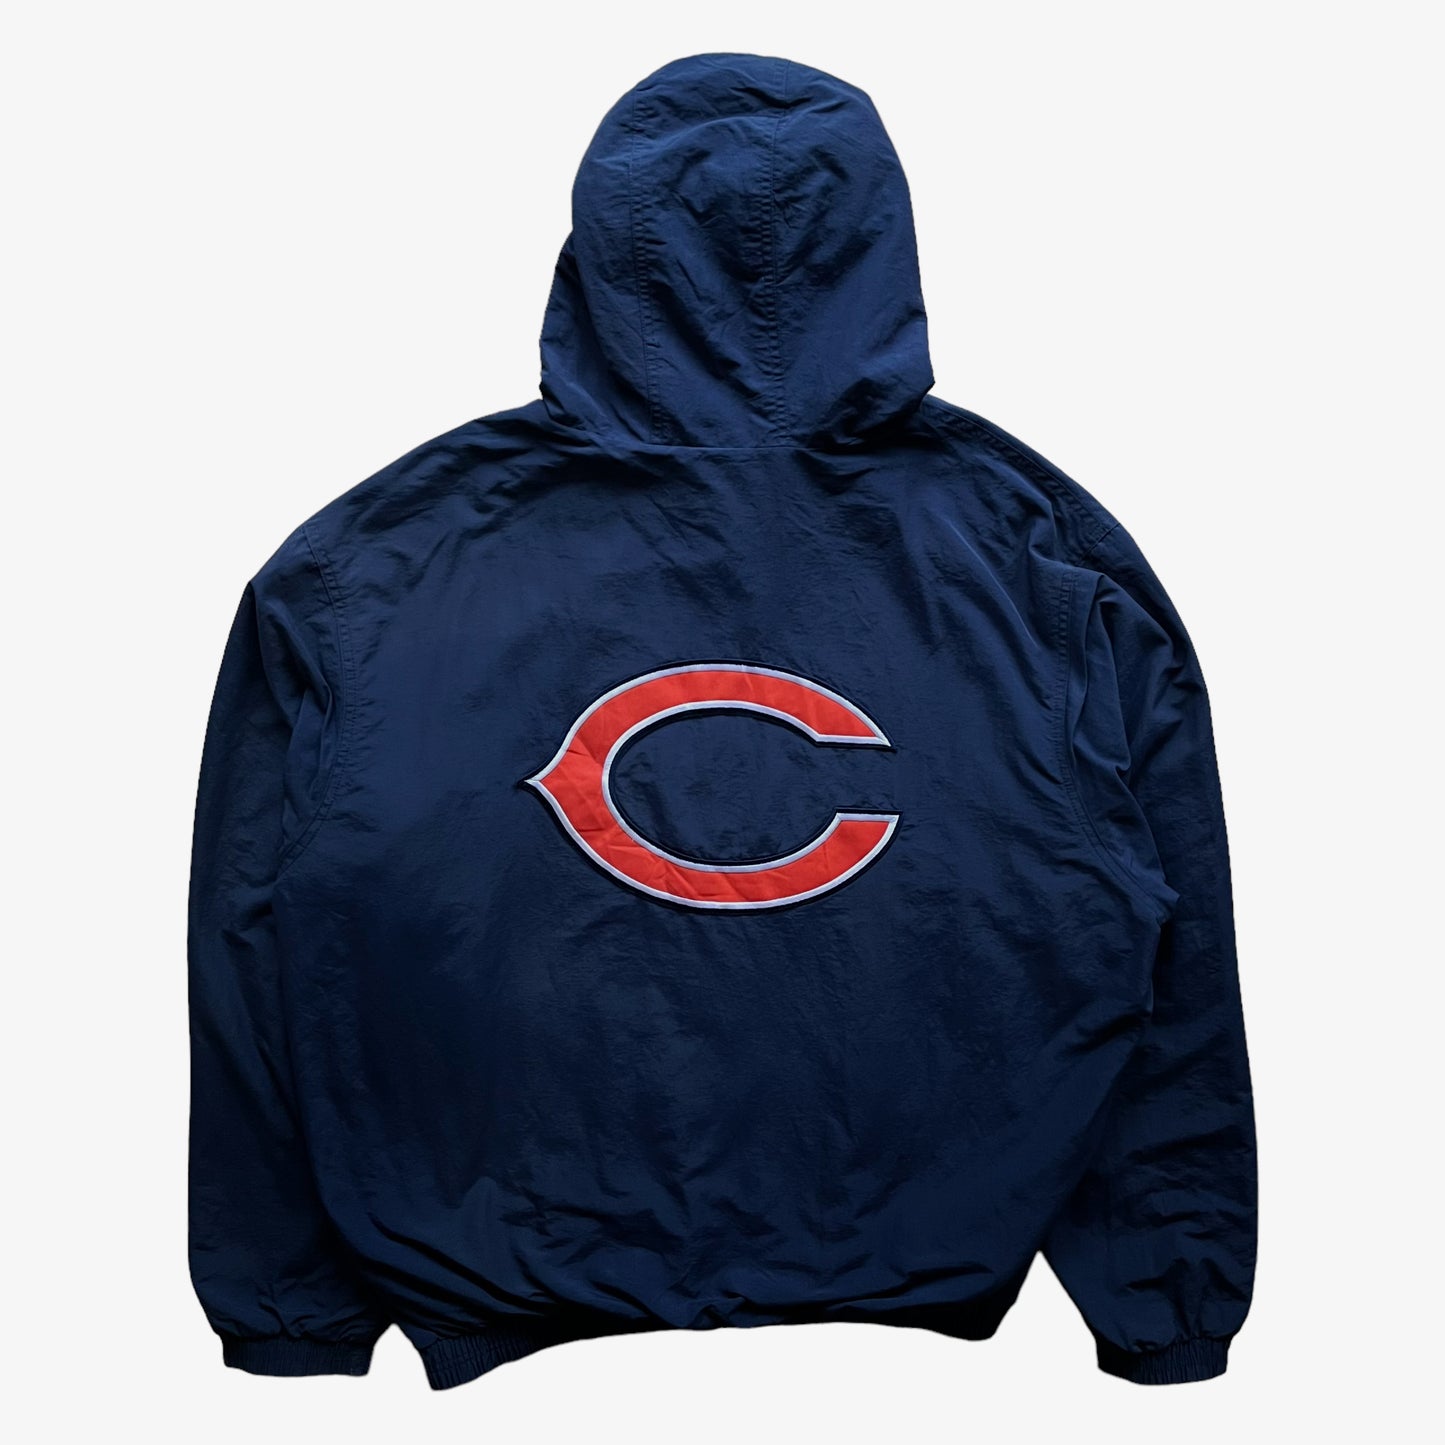 Vintage Y2K Reebok NFL Chicago Bears Jacket With Back Embroidered Team Crest Back - Casspios Dream